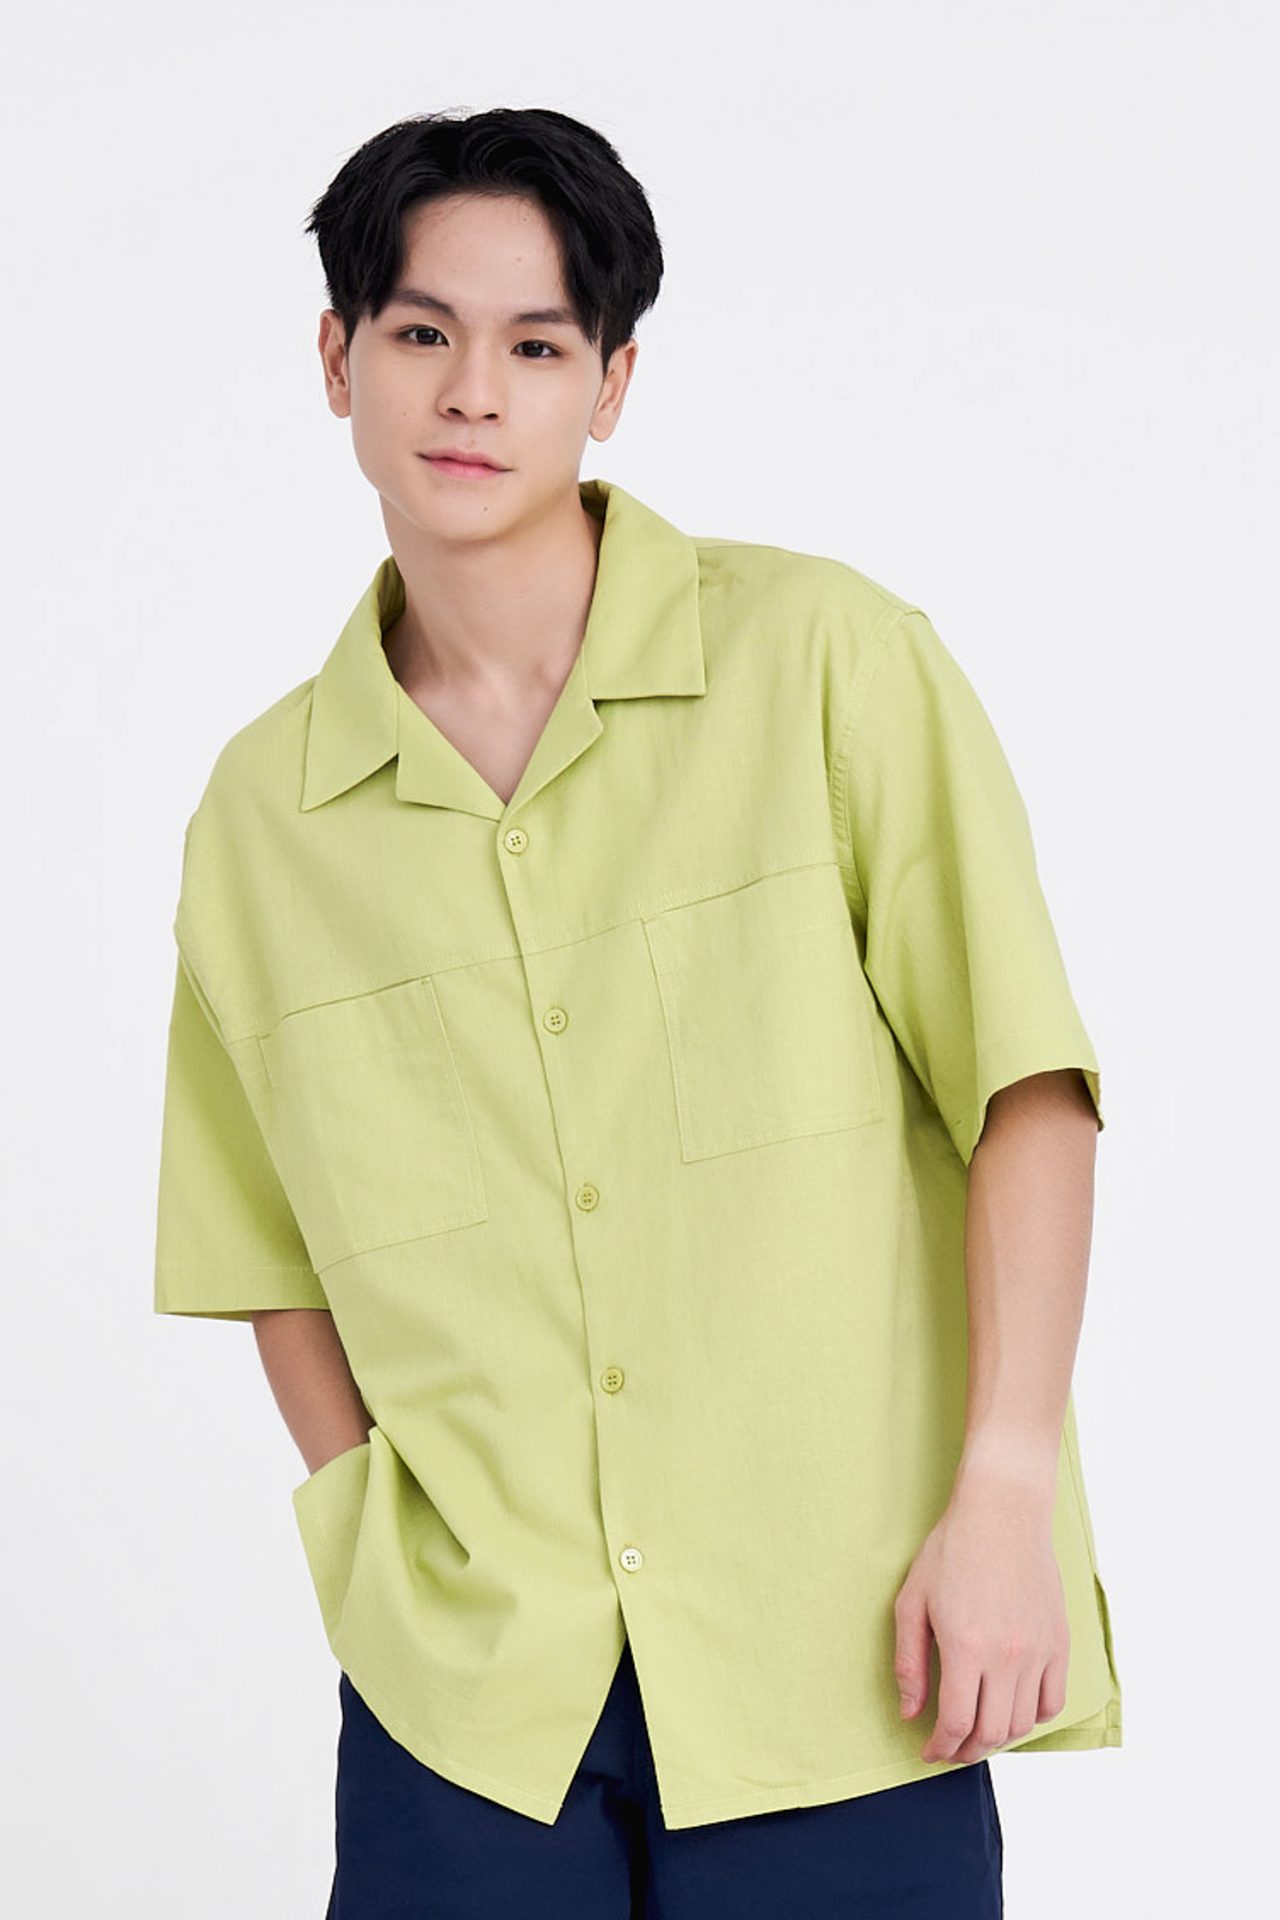 Canary Yellow T-Shirt for Men – Cutton Garments